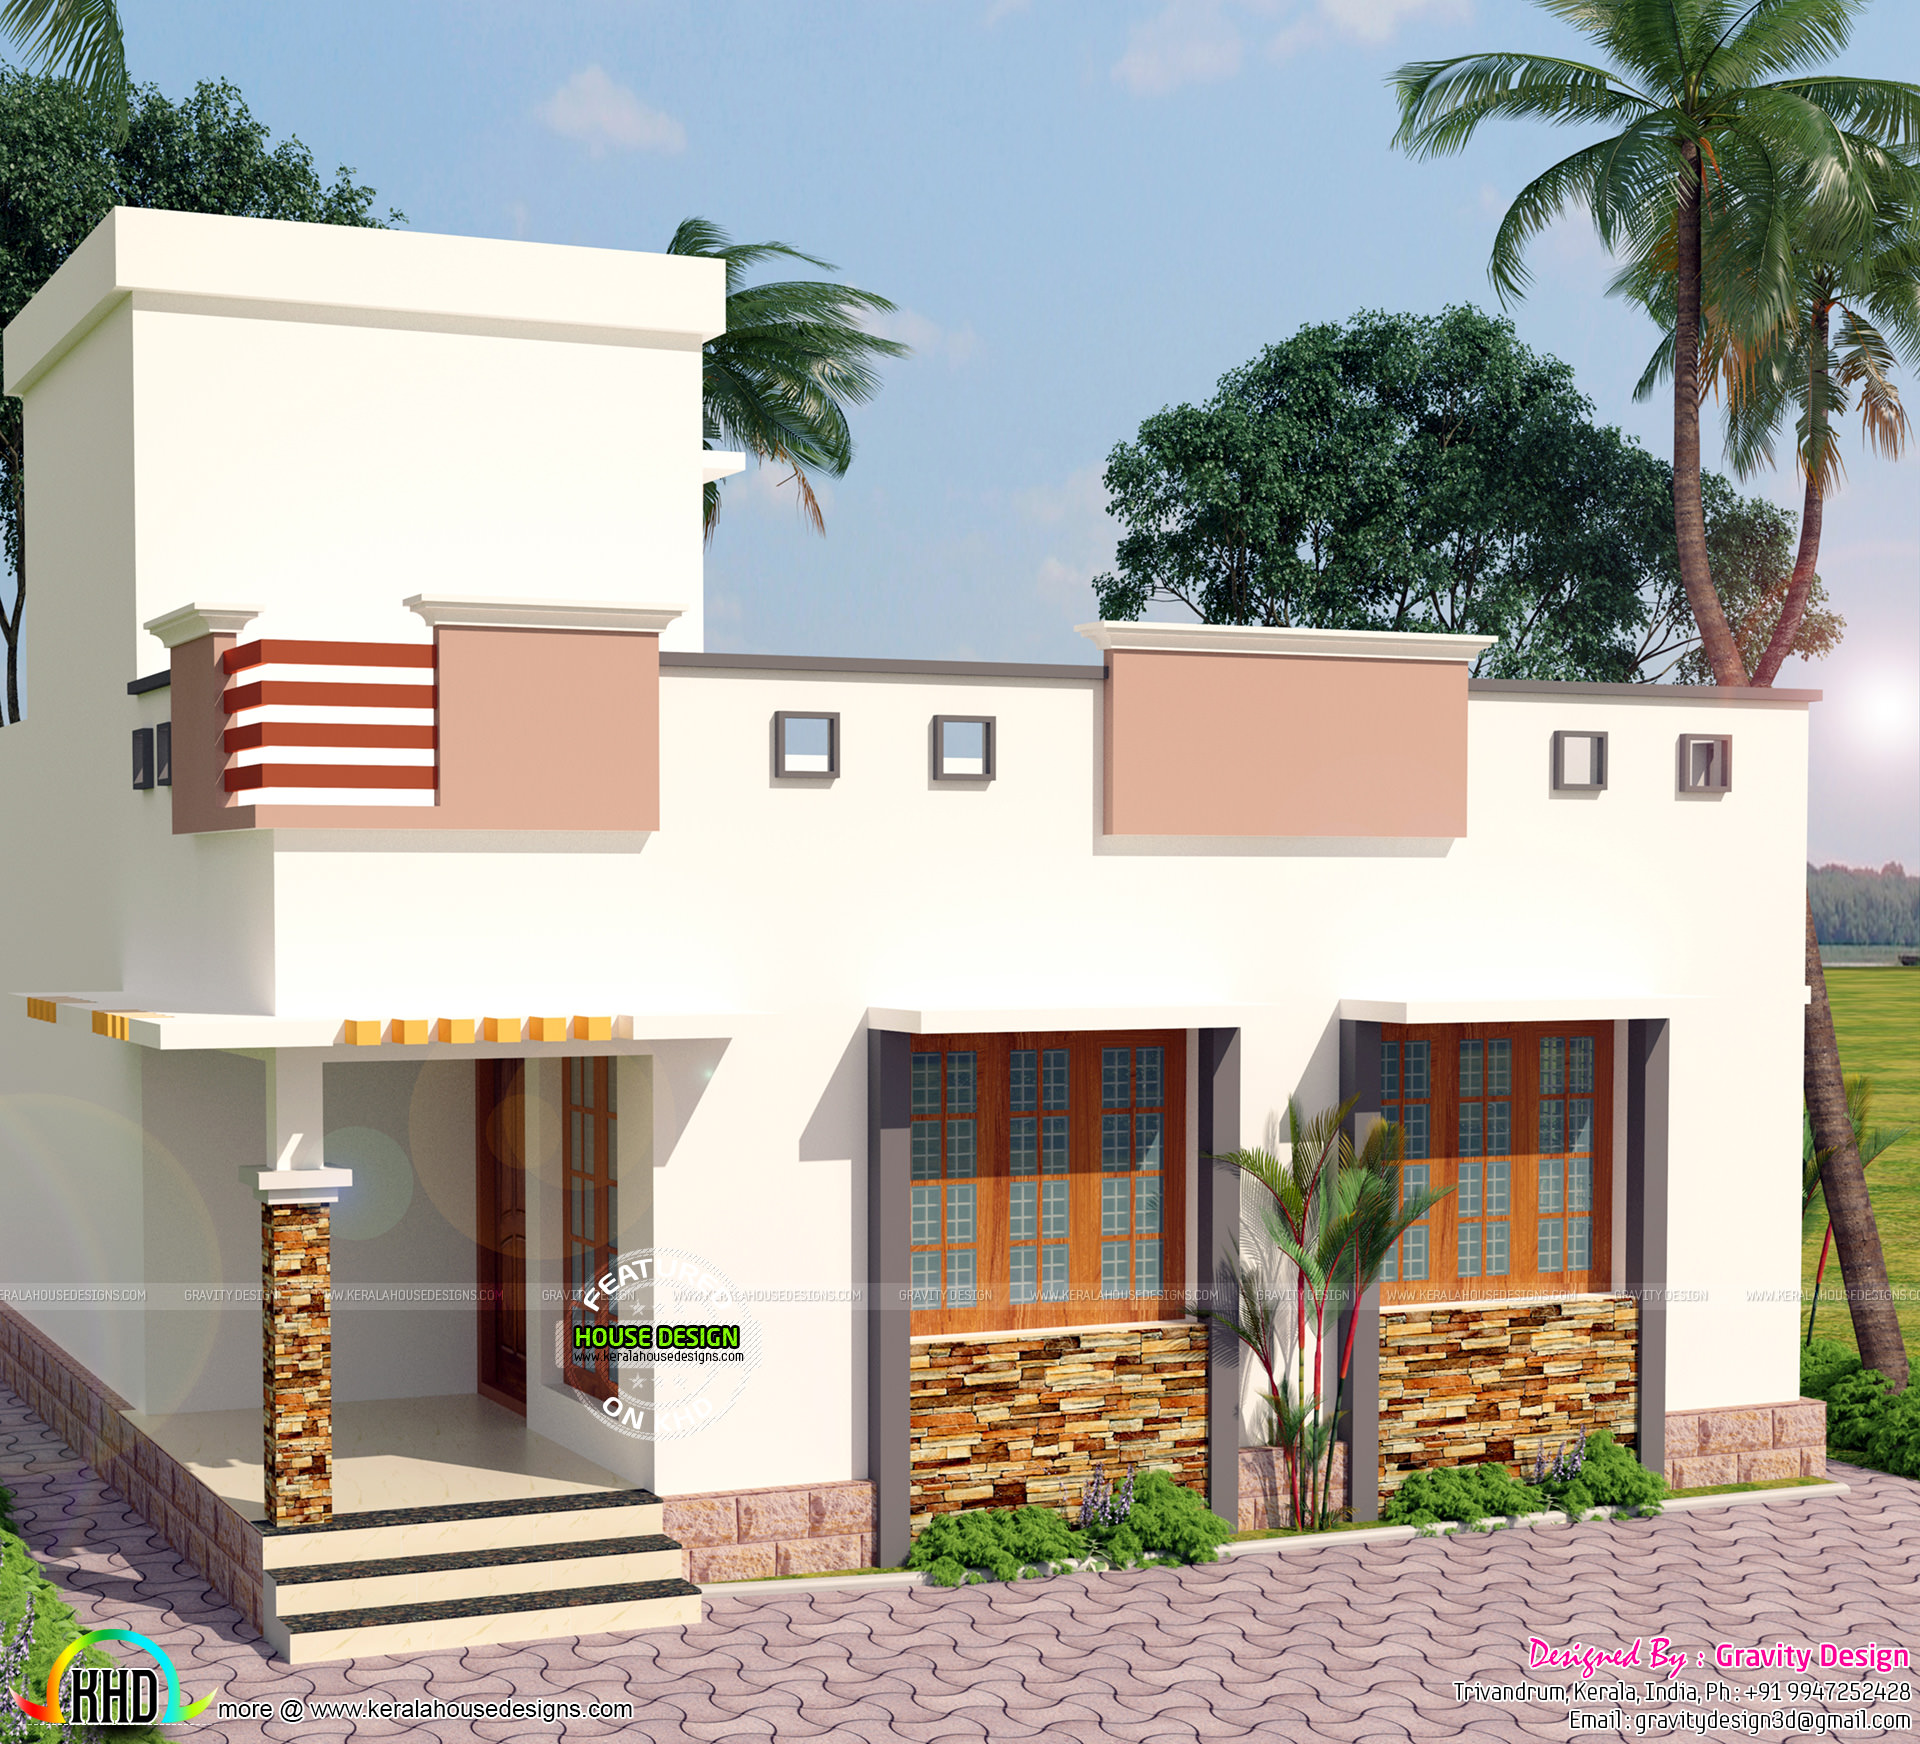  900  sq  ft  2 bedroom modern home  Kerala home  design  